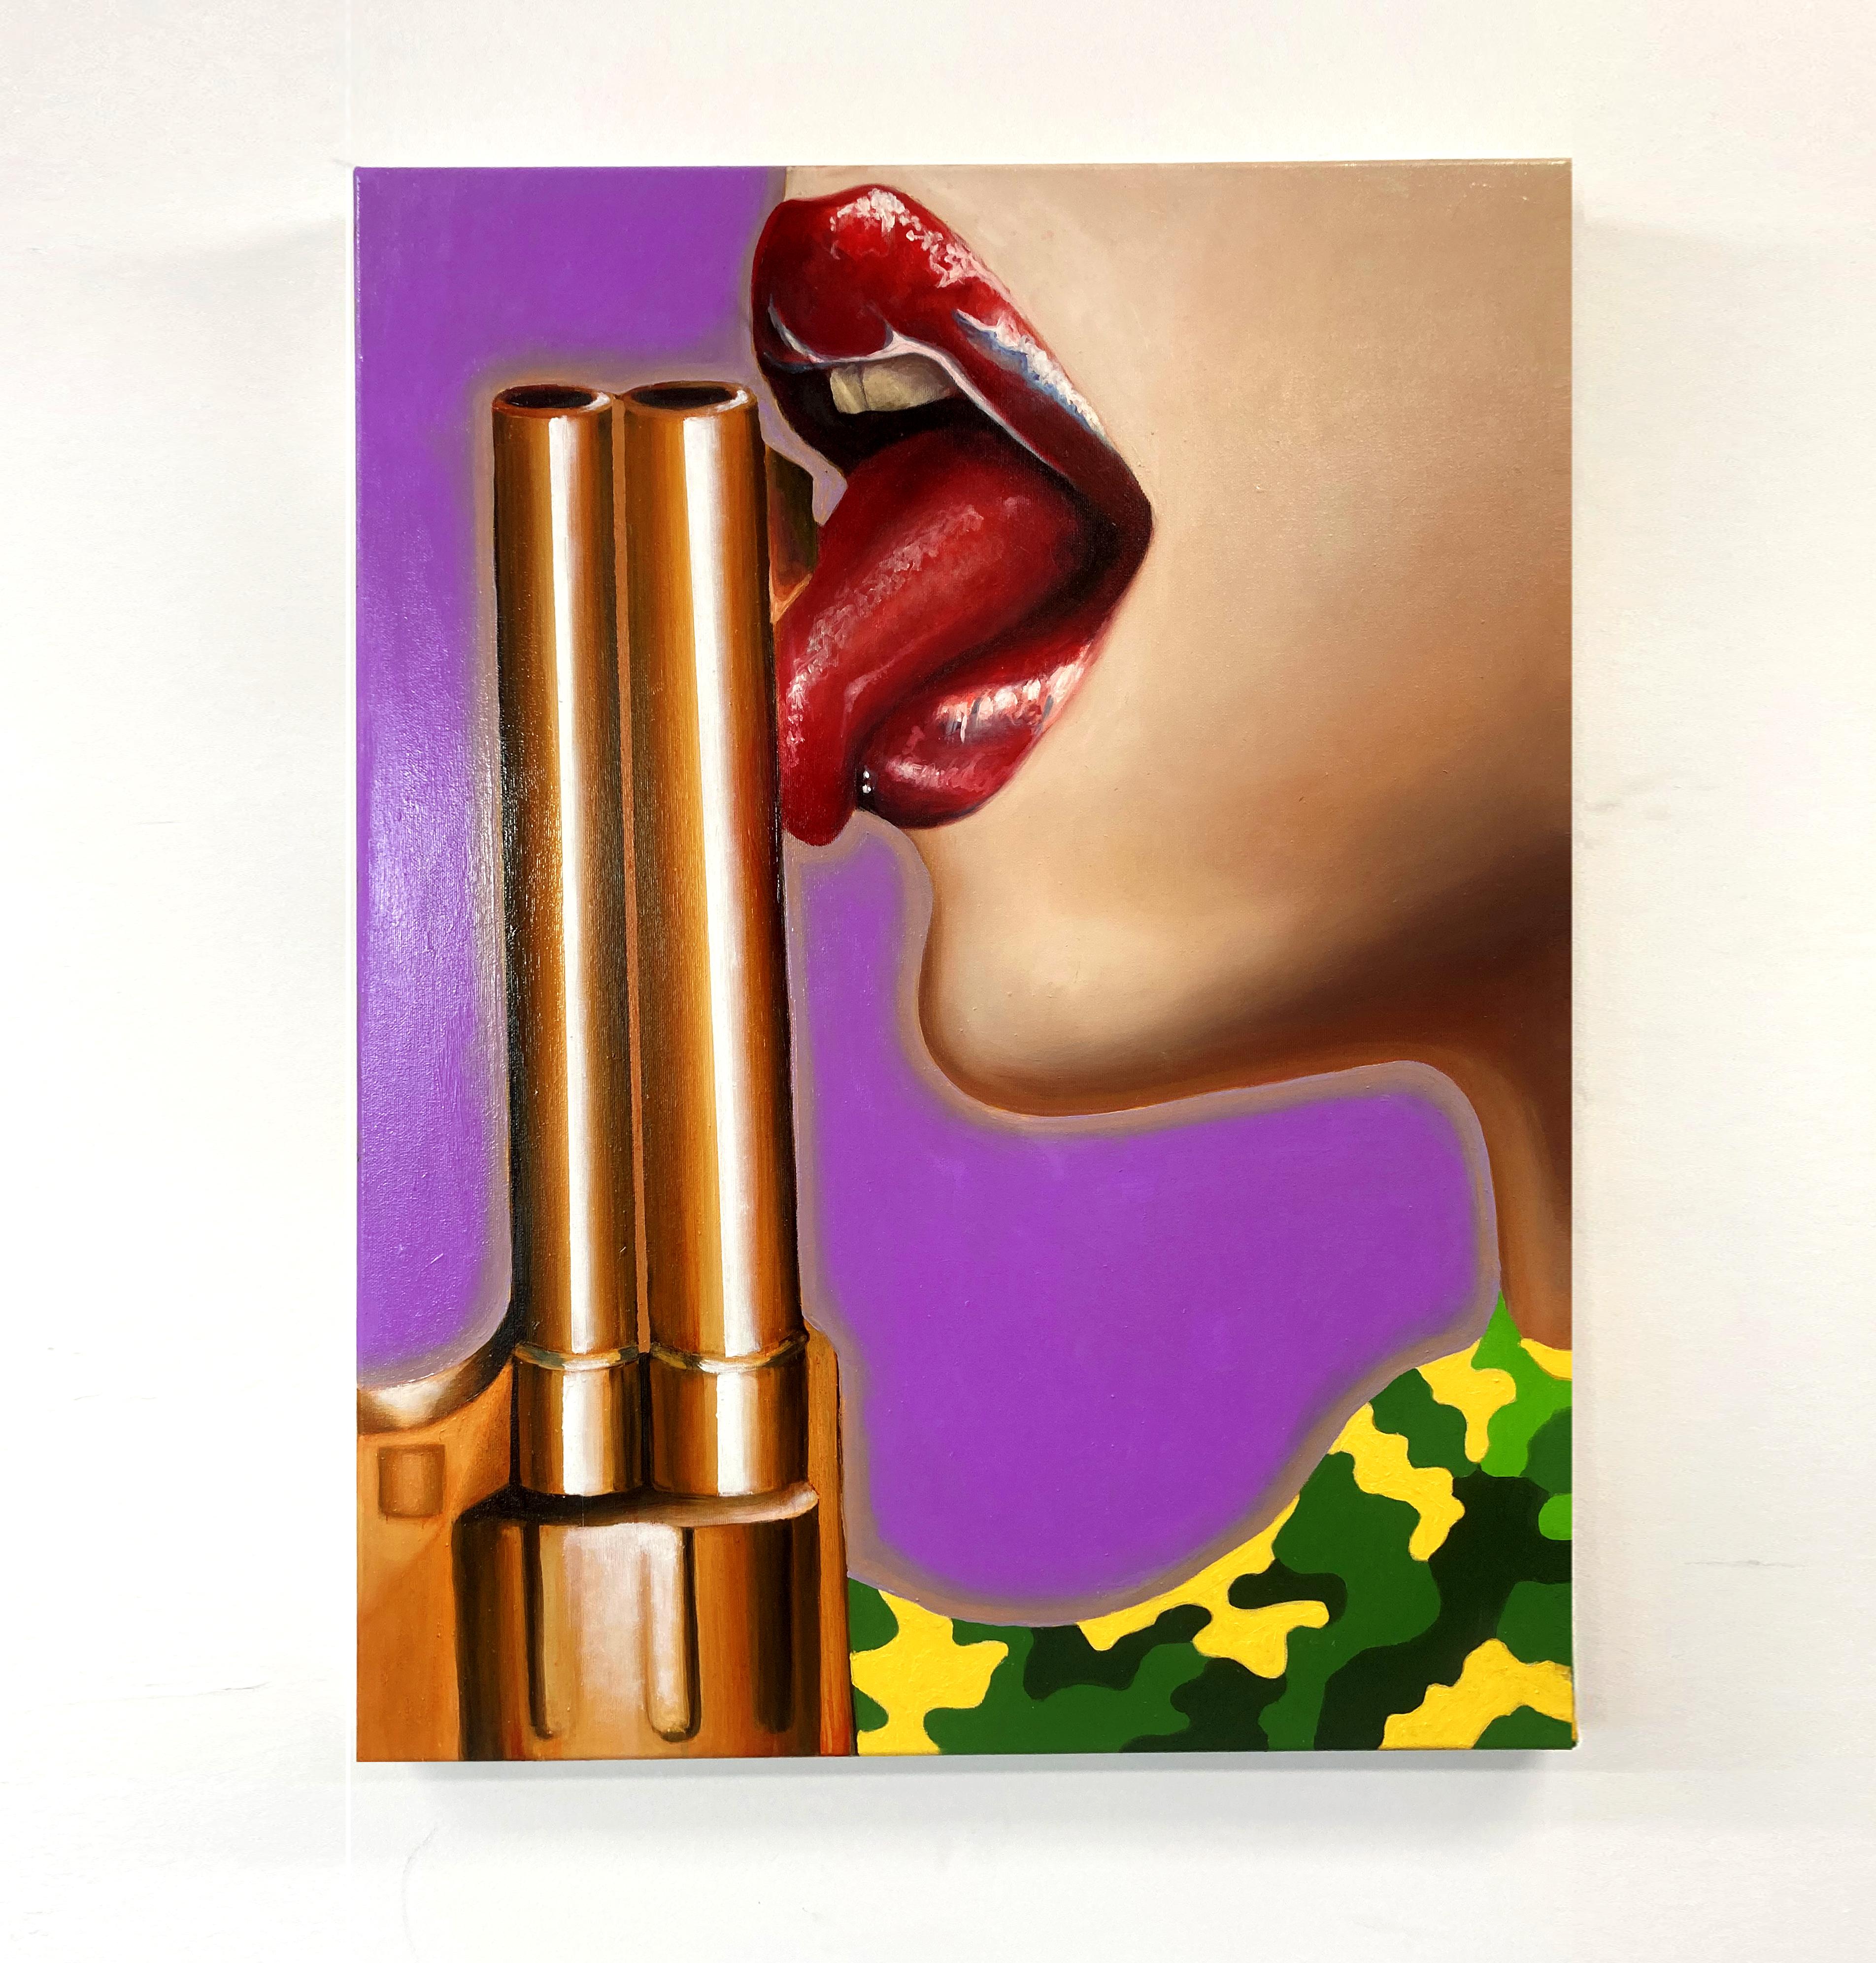 The Golden Gun -Contemporary, Pop Art, Figurative Art, modern, female Portrait - Painting by Manzur Kargar